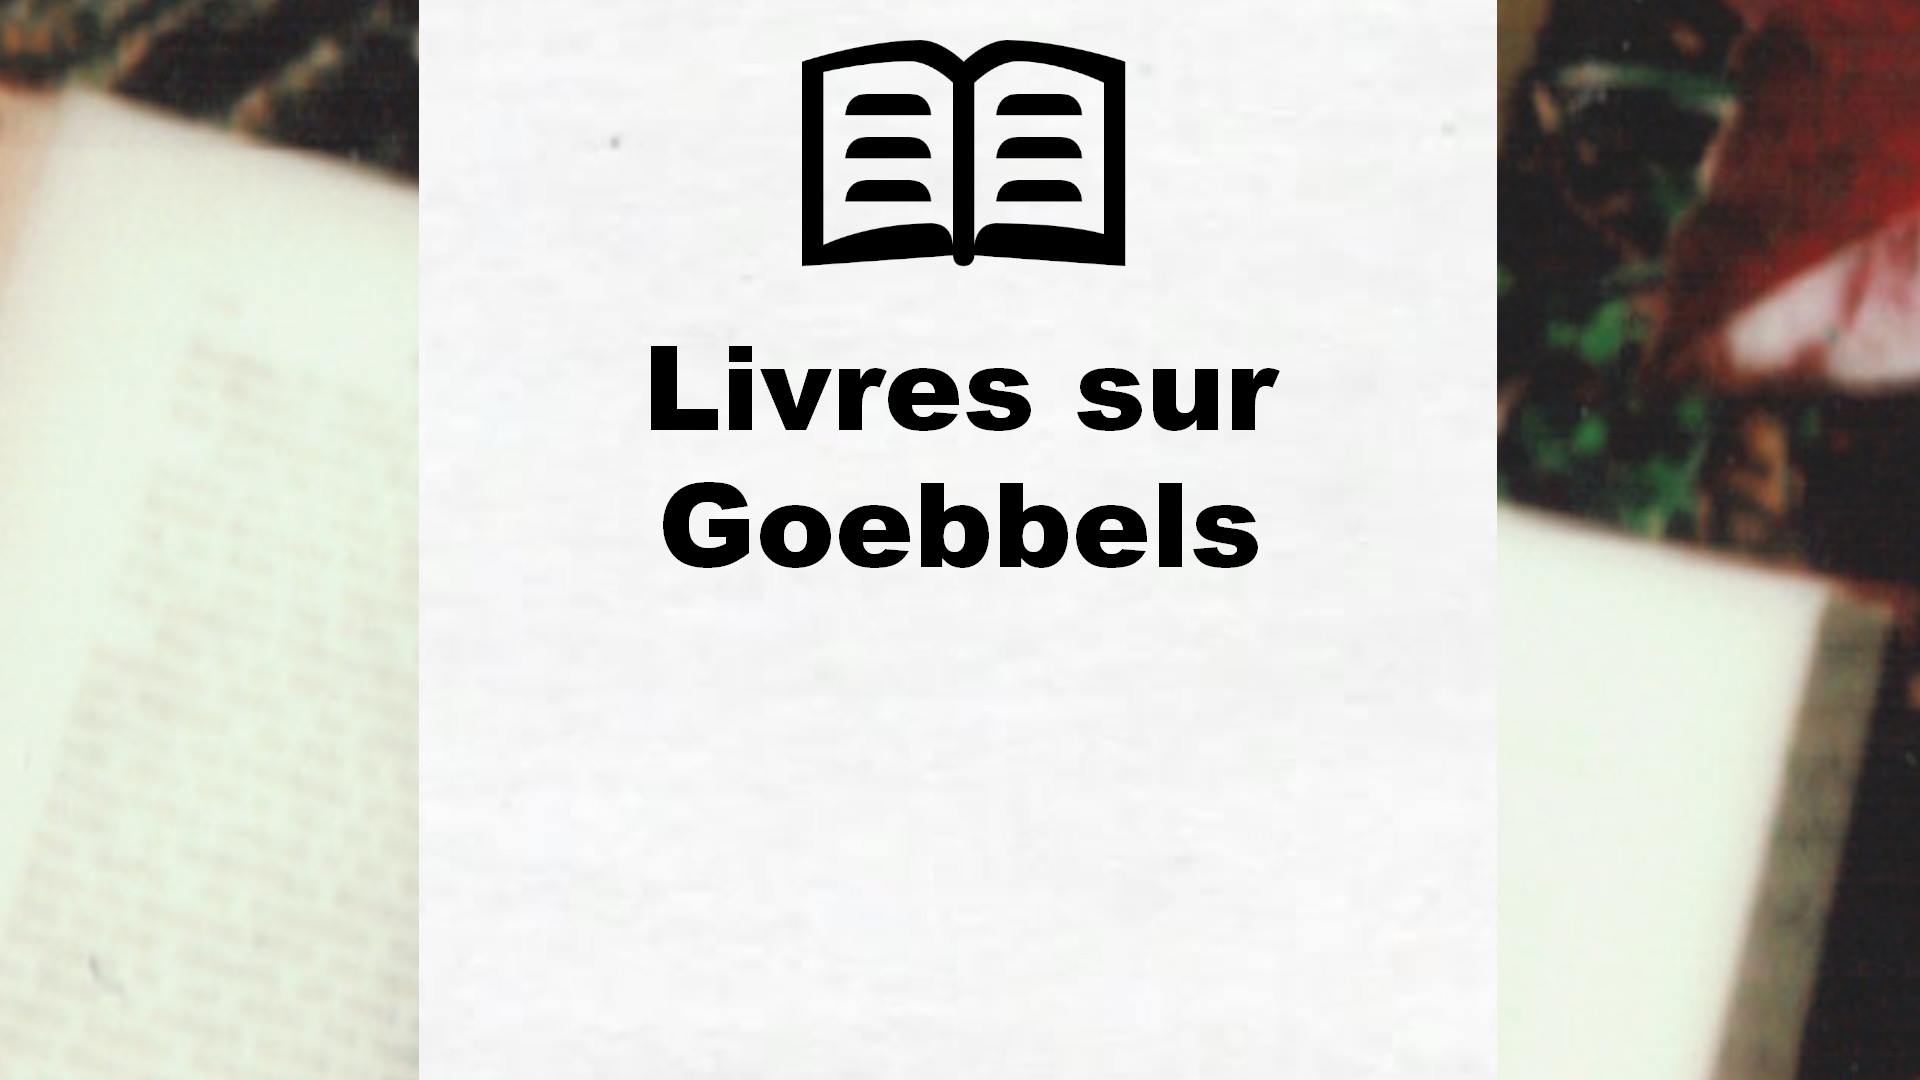 Livres sur Goebbels